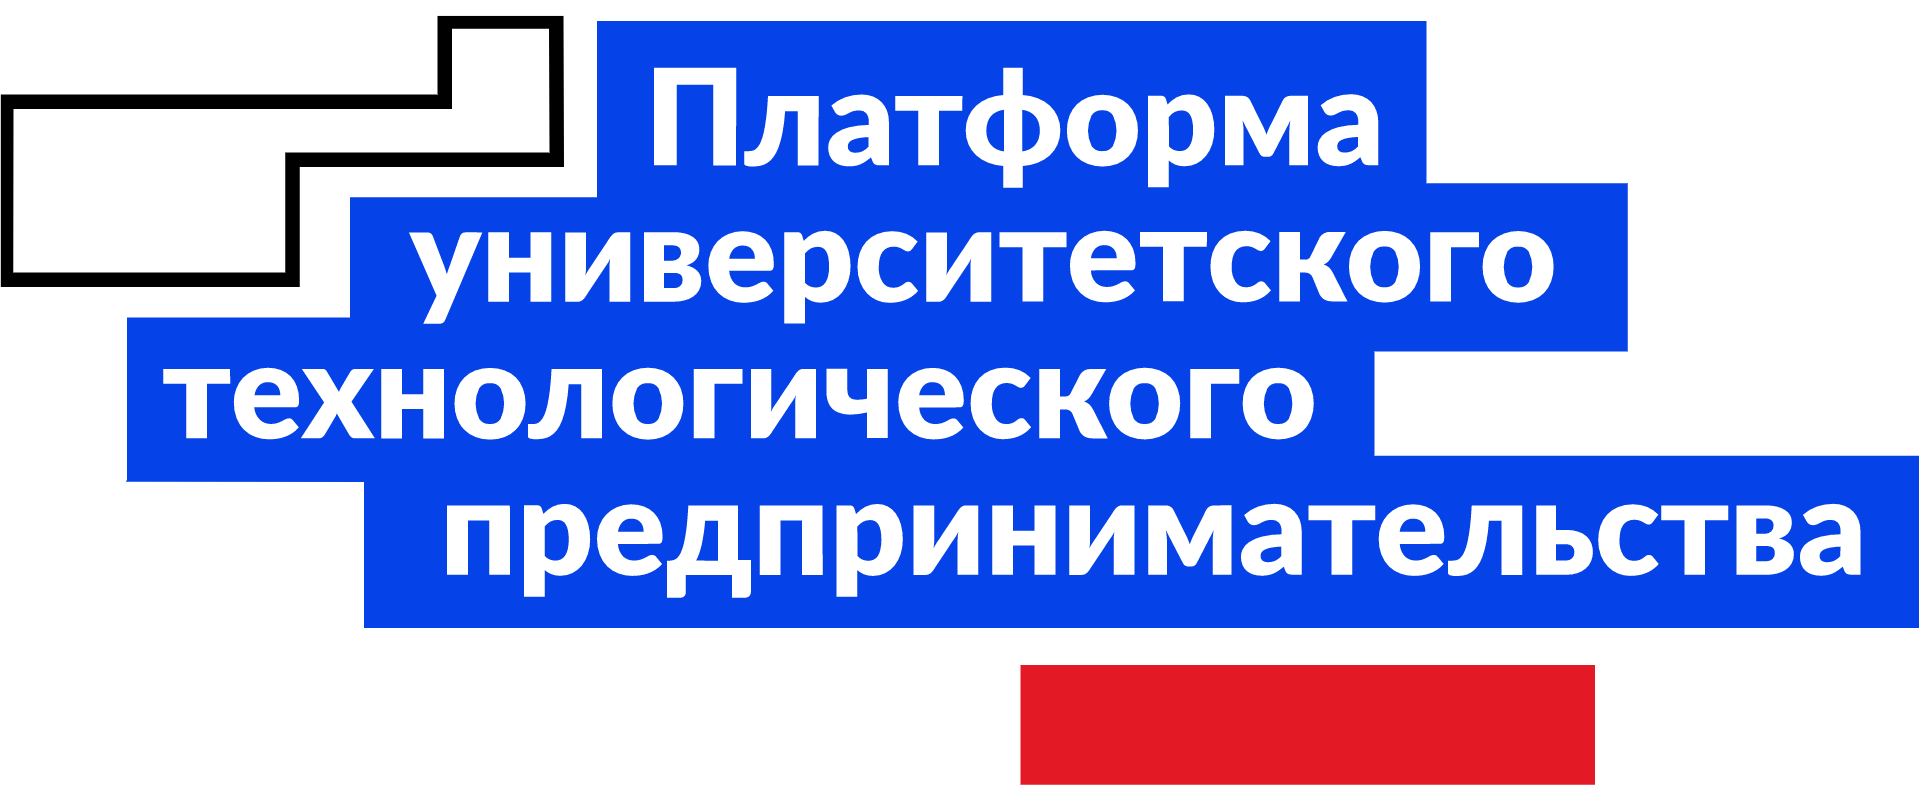 https://s3.dtln.ru/unti-prod-people/file/accelerator/logo-7p3tgxcar3.png